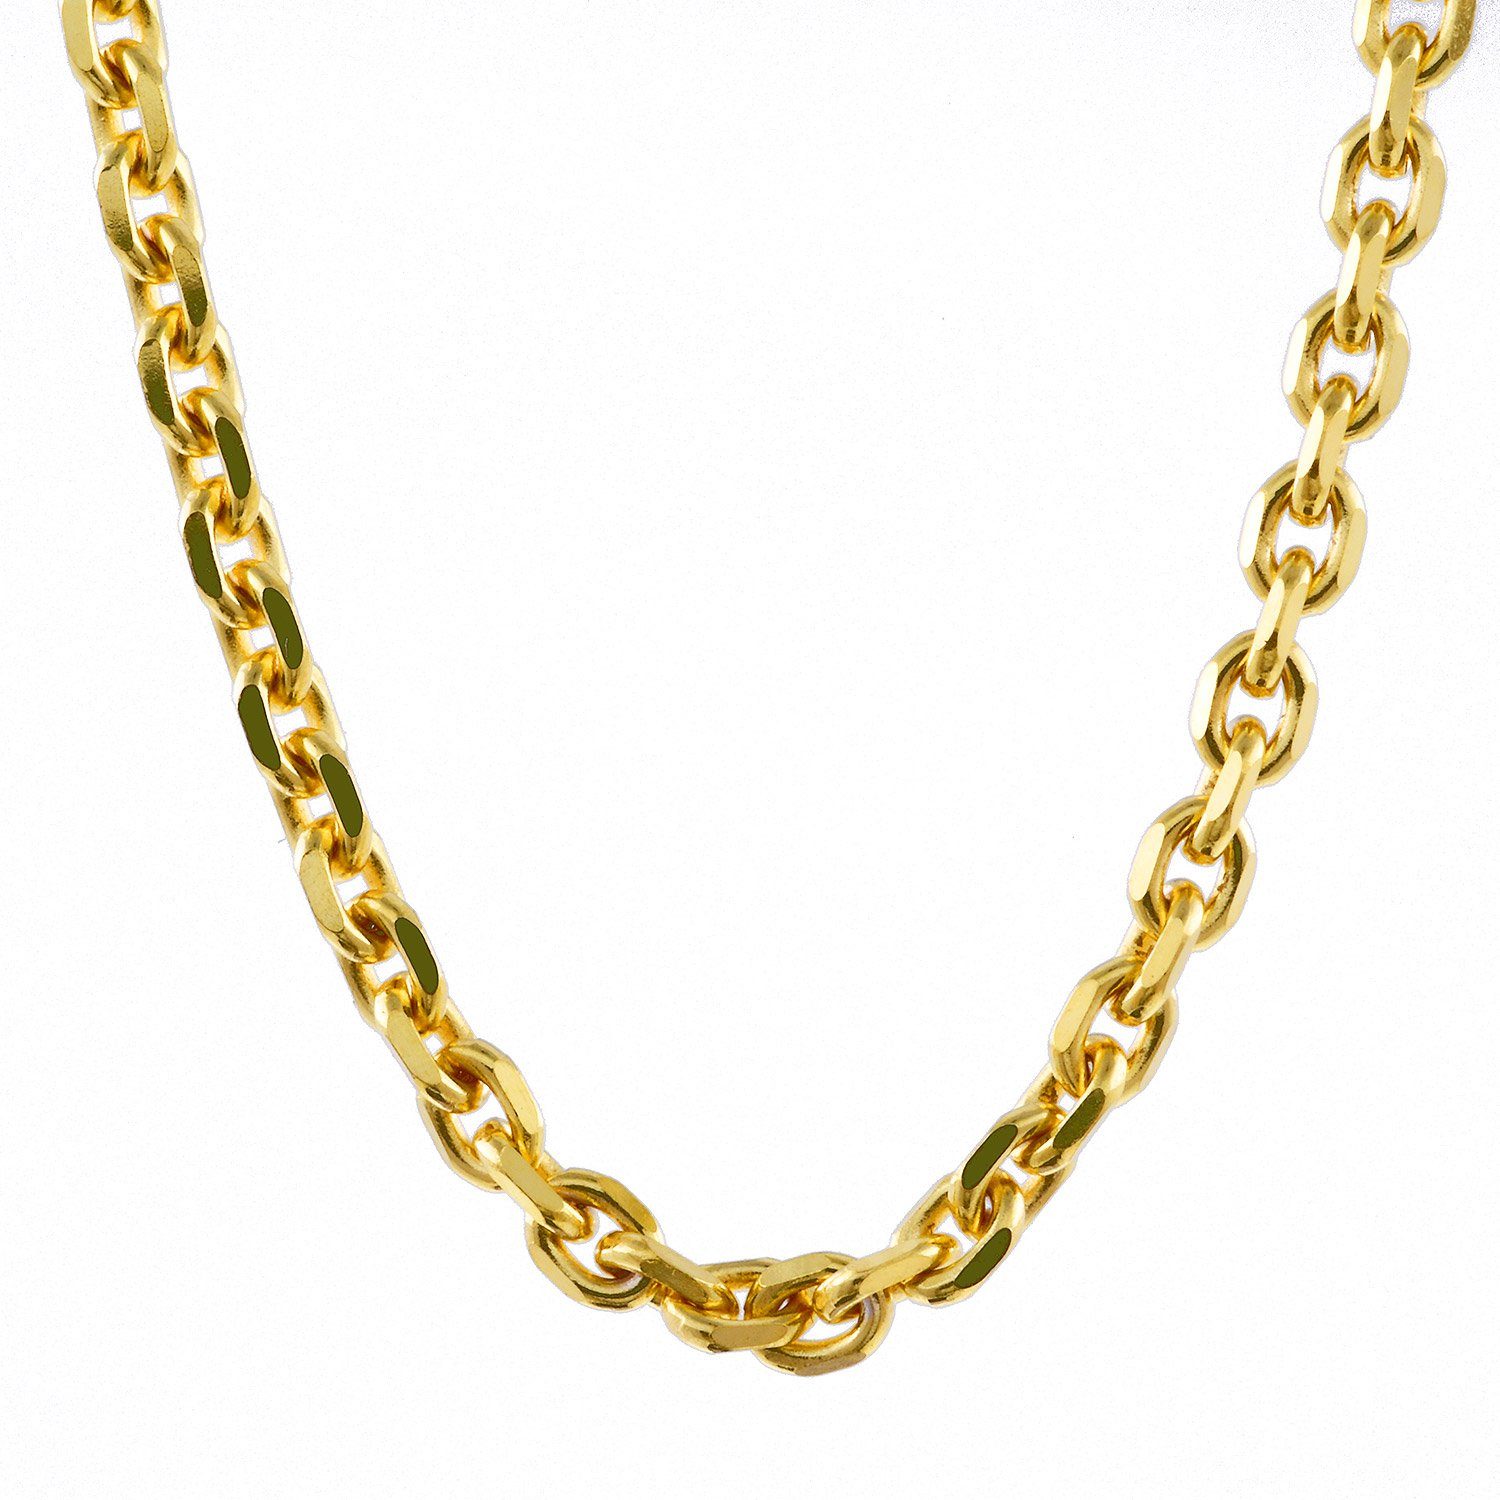 HOPLO Goldkette Ankerkette diamantiert 333 - 8 Karat Gold 1,7 mm  Kettenlänge 70 cm, Made in Germany